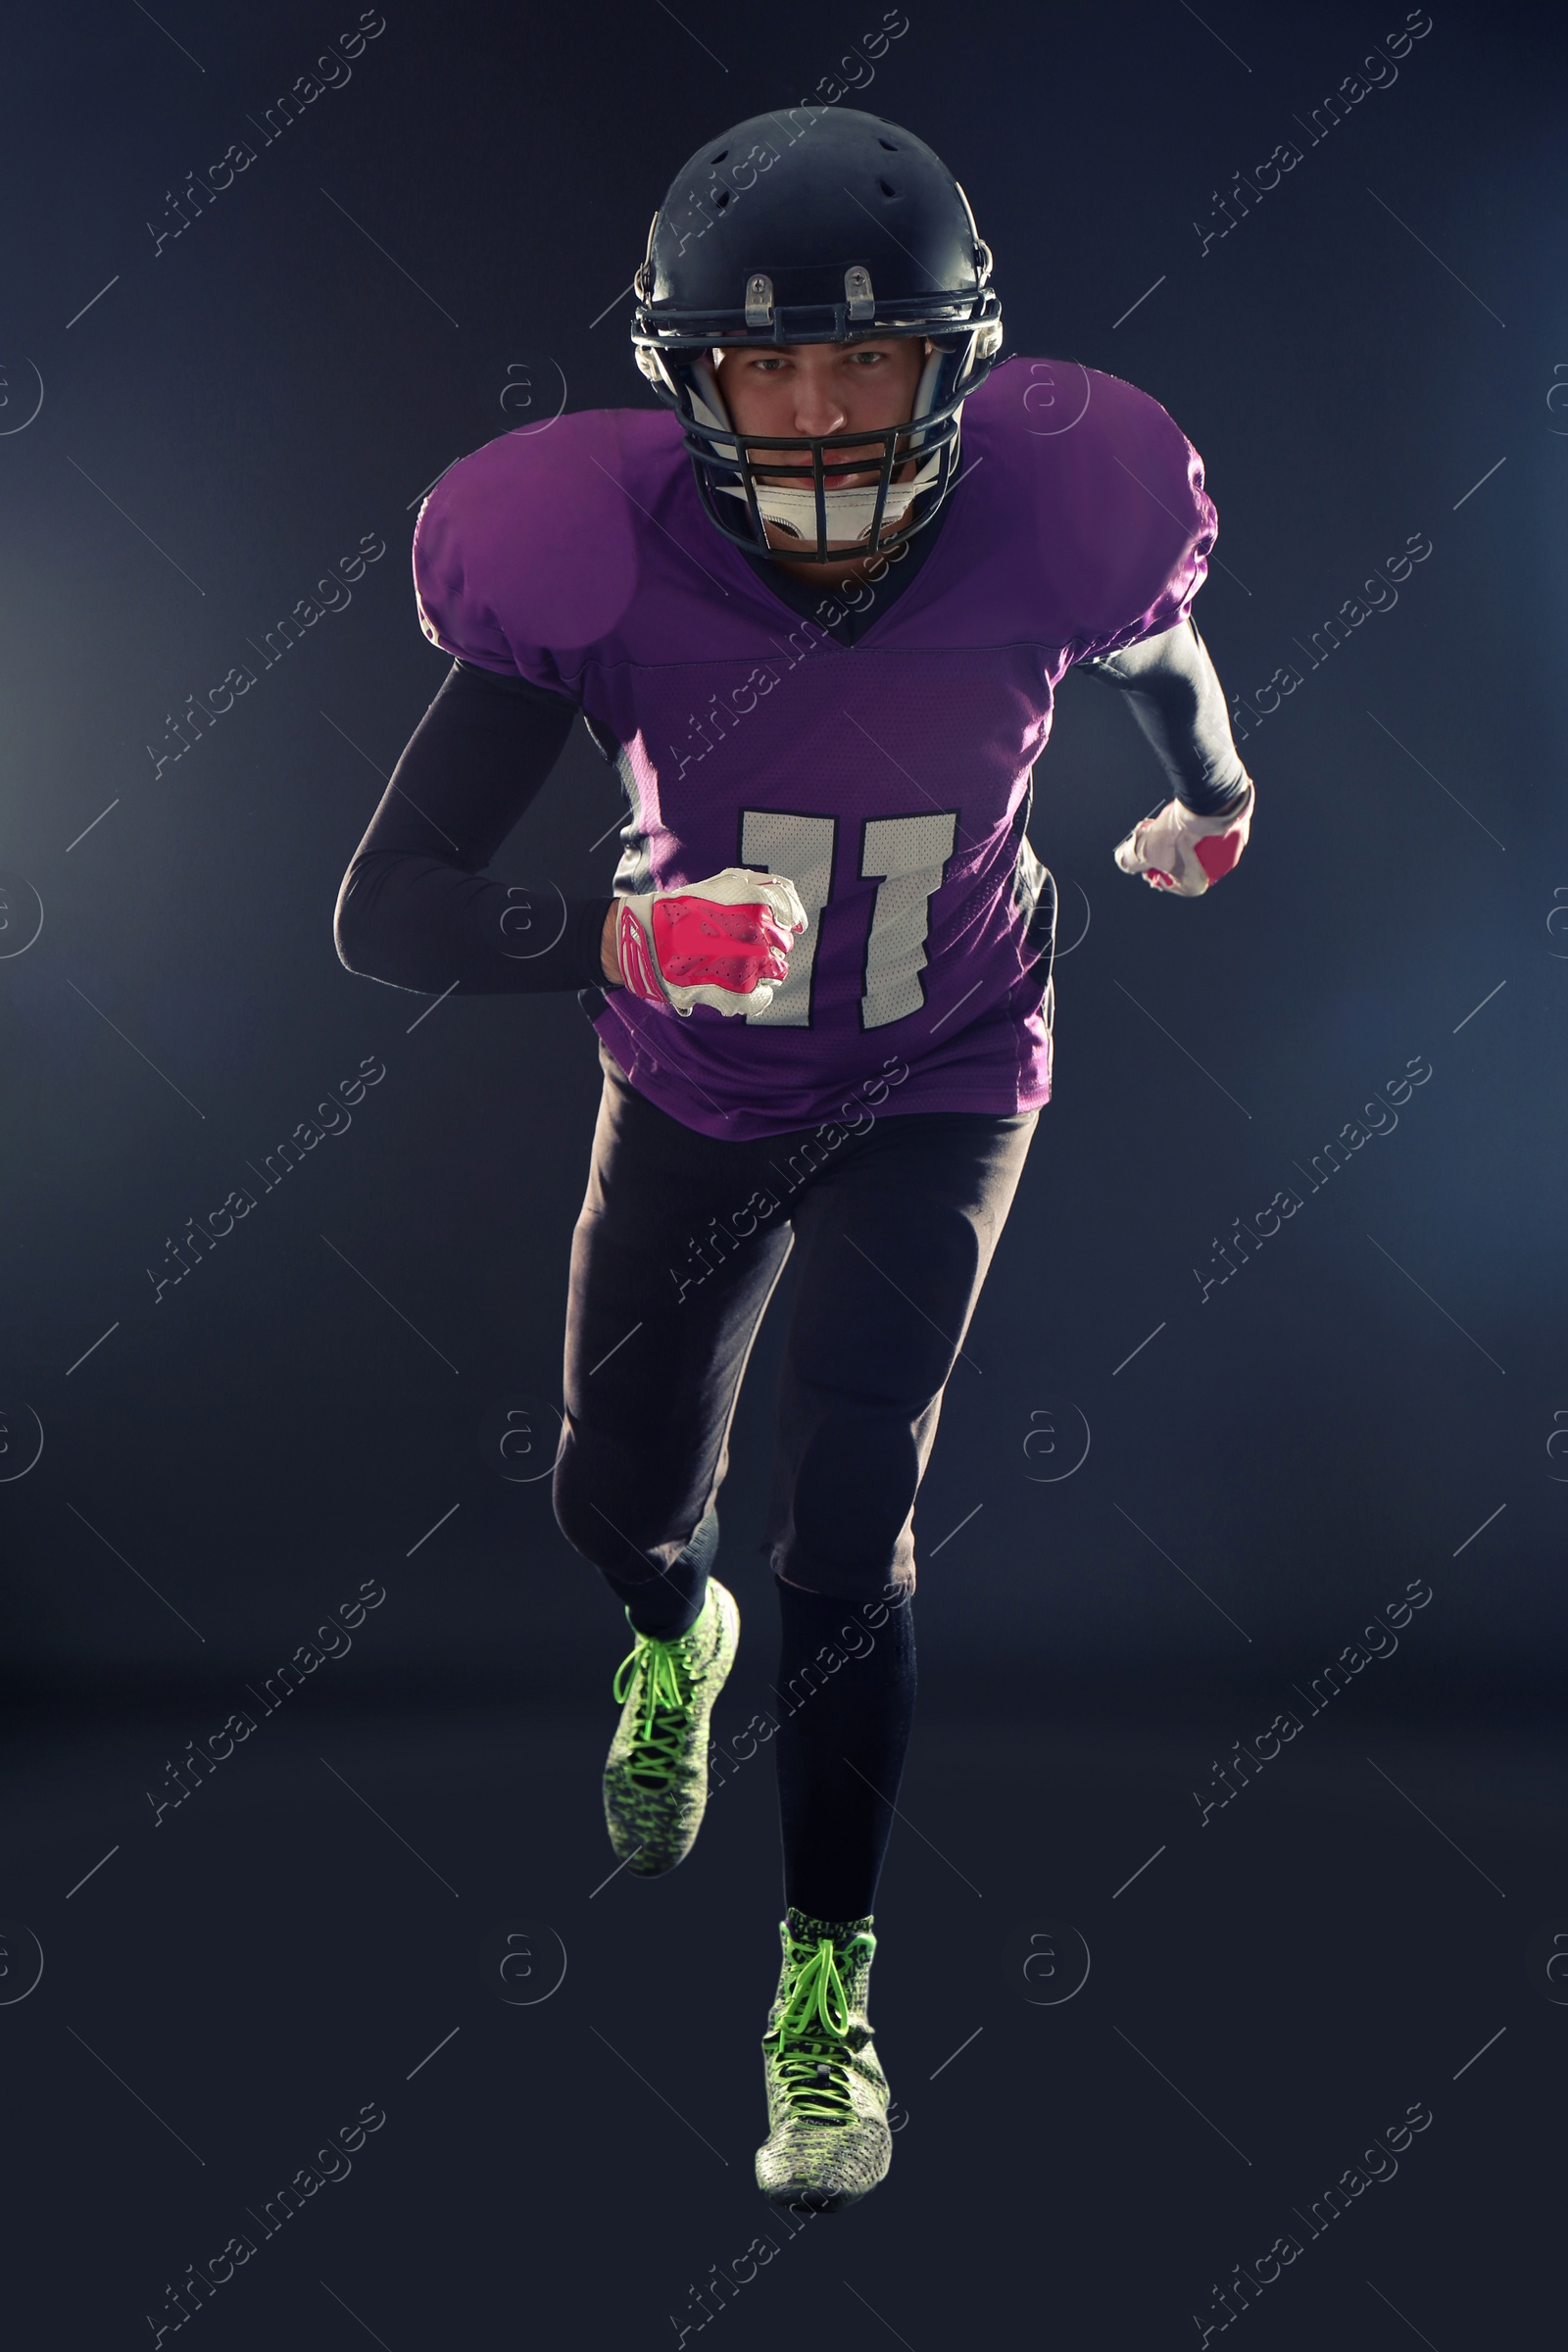 Photo of American football player in uniform running on dark background